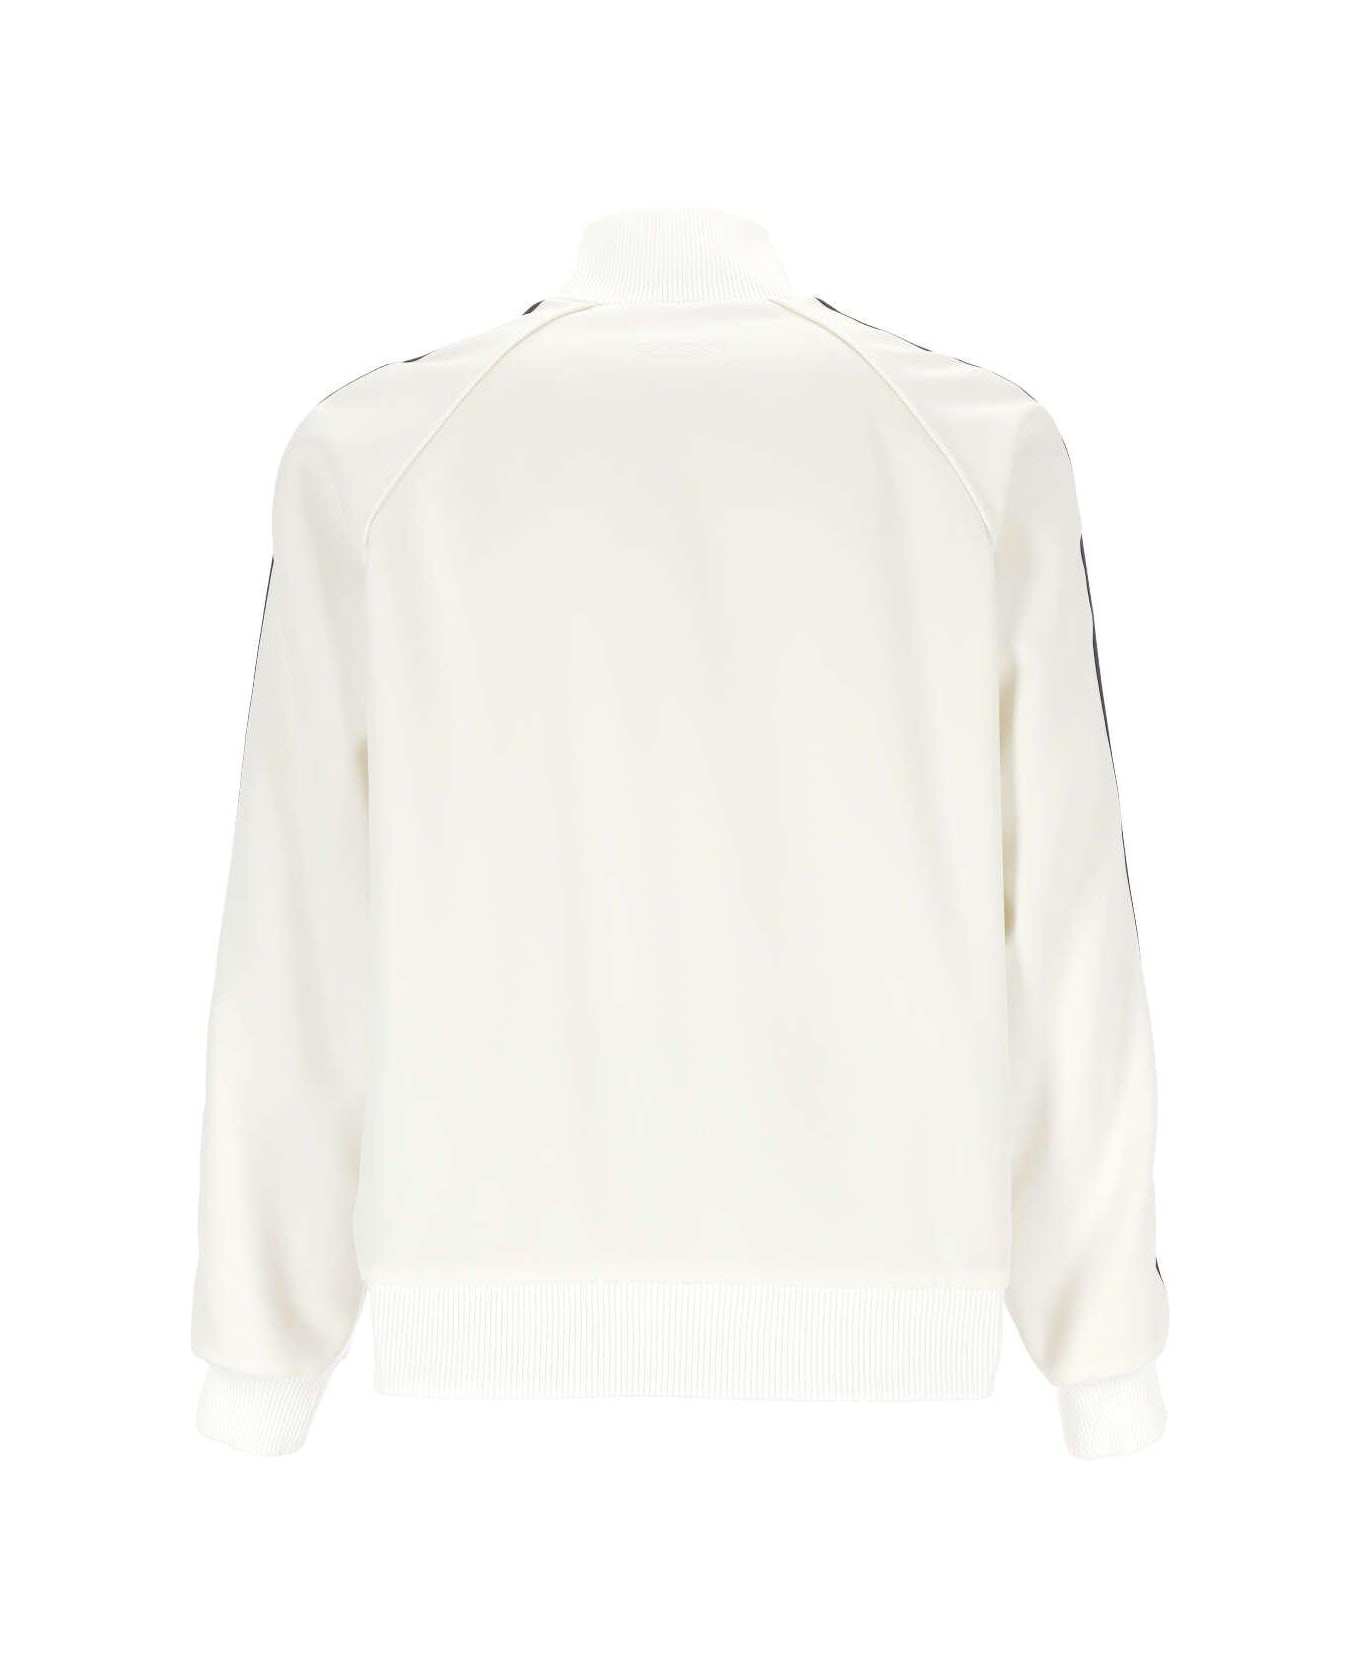 Gucci Fluid Drill Zip Jacket - White ジャケット